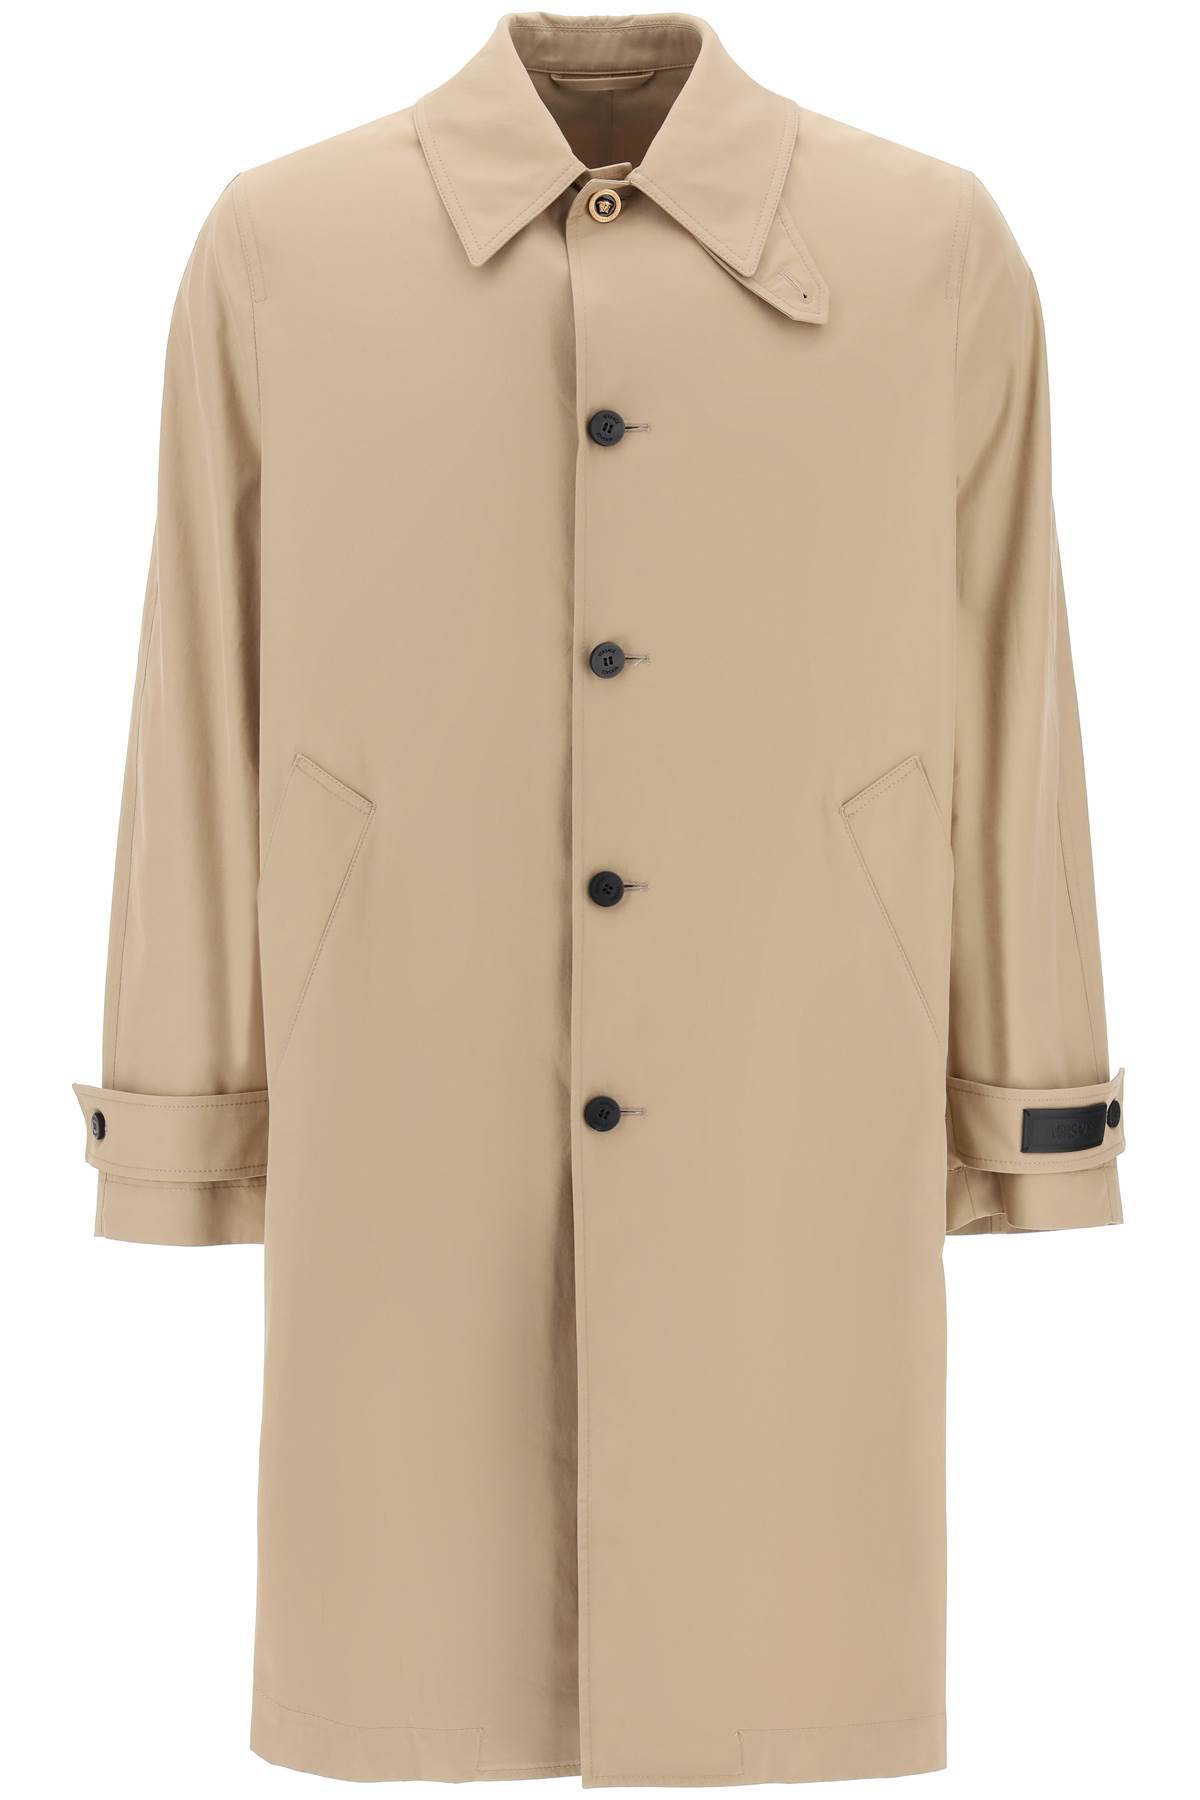 Versace VERSACE "single-breasted waterproof coat with